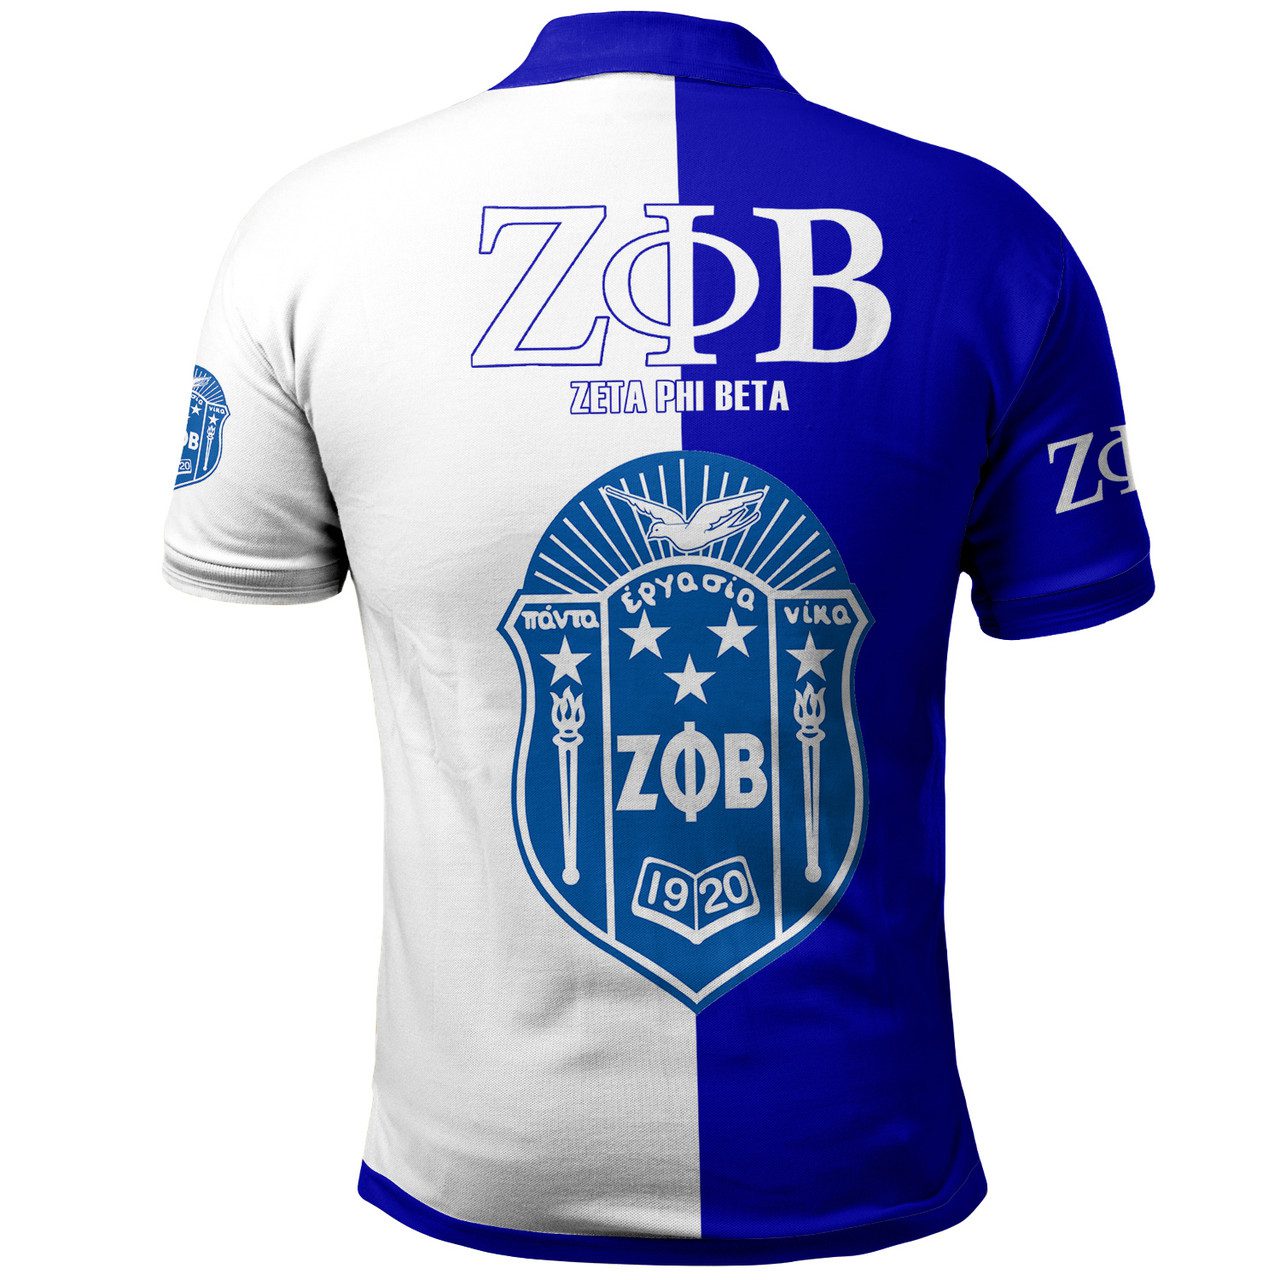 Zeta Phi Beta Polo Shirt – Sorority Polo Shirt I